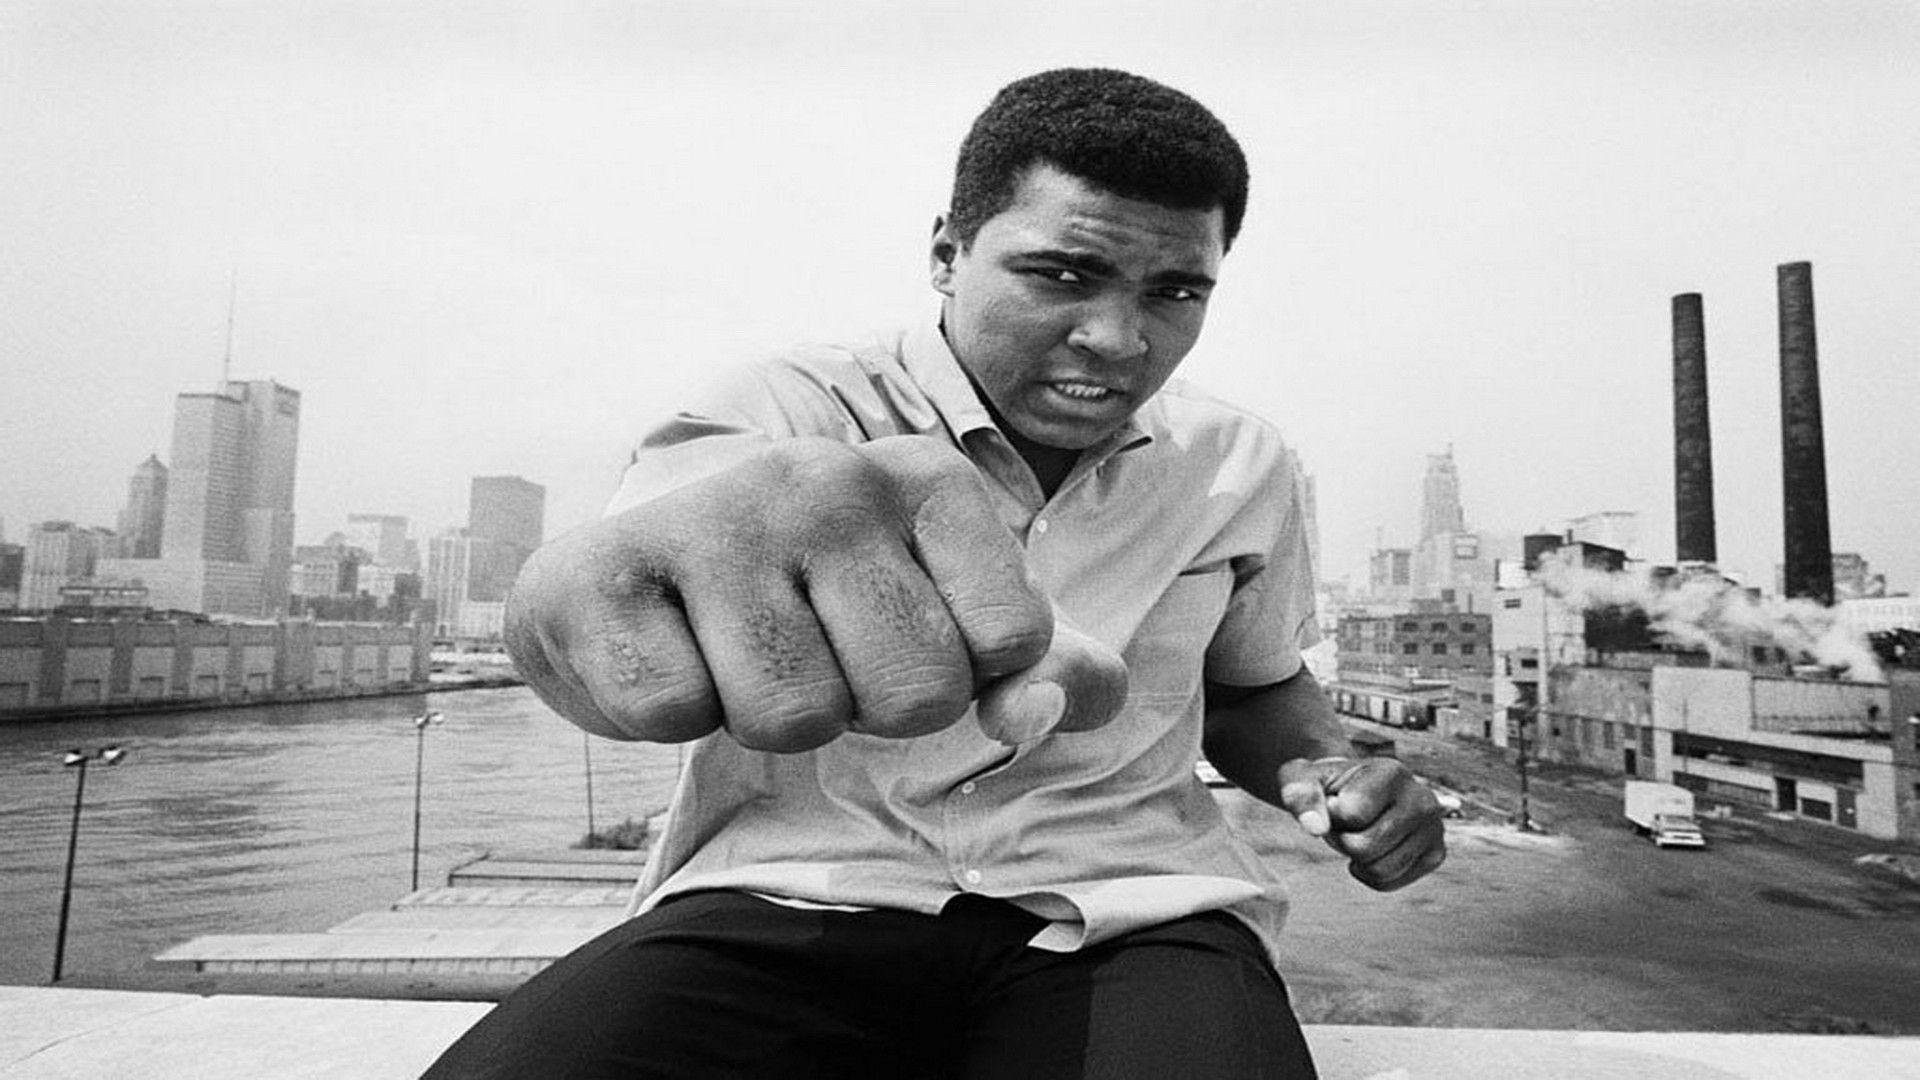 Muhammad Ali Image